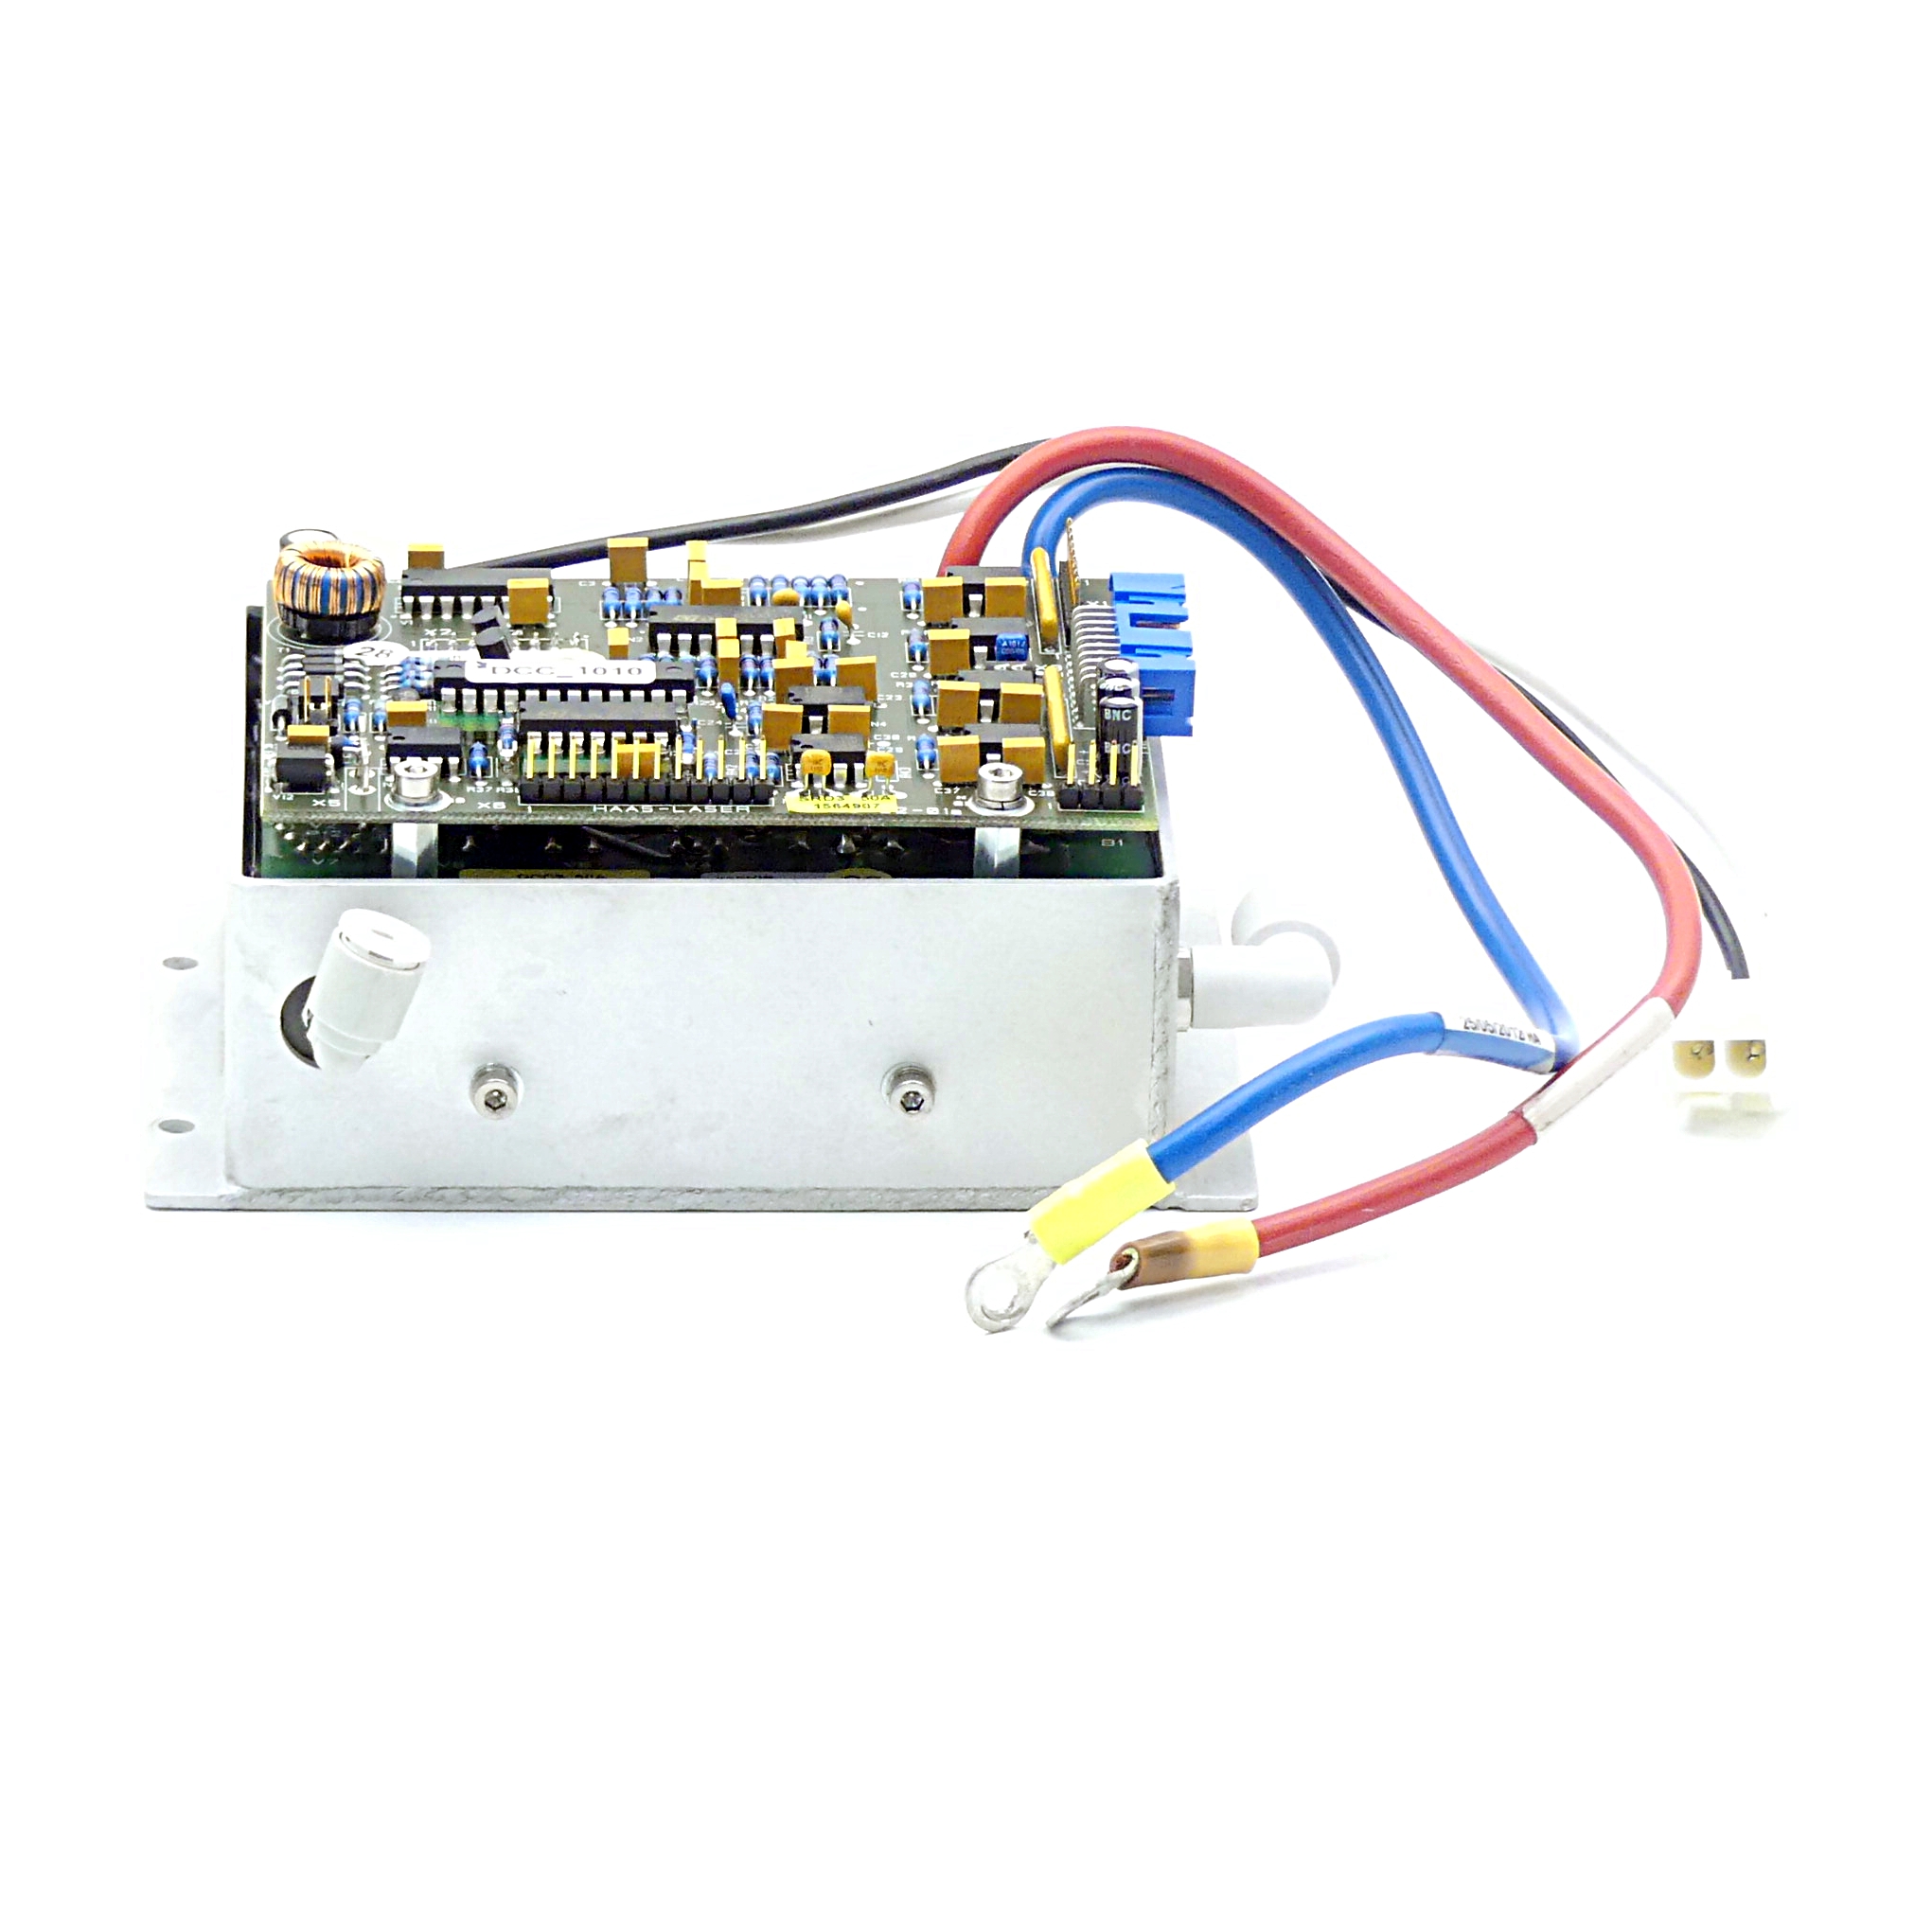 Laser diode controller module DCC3 